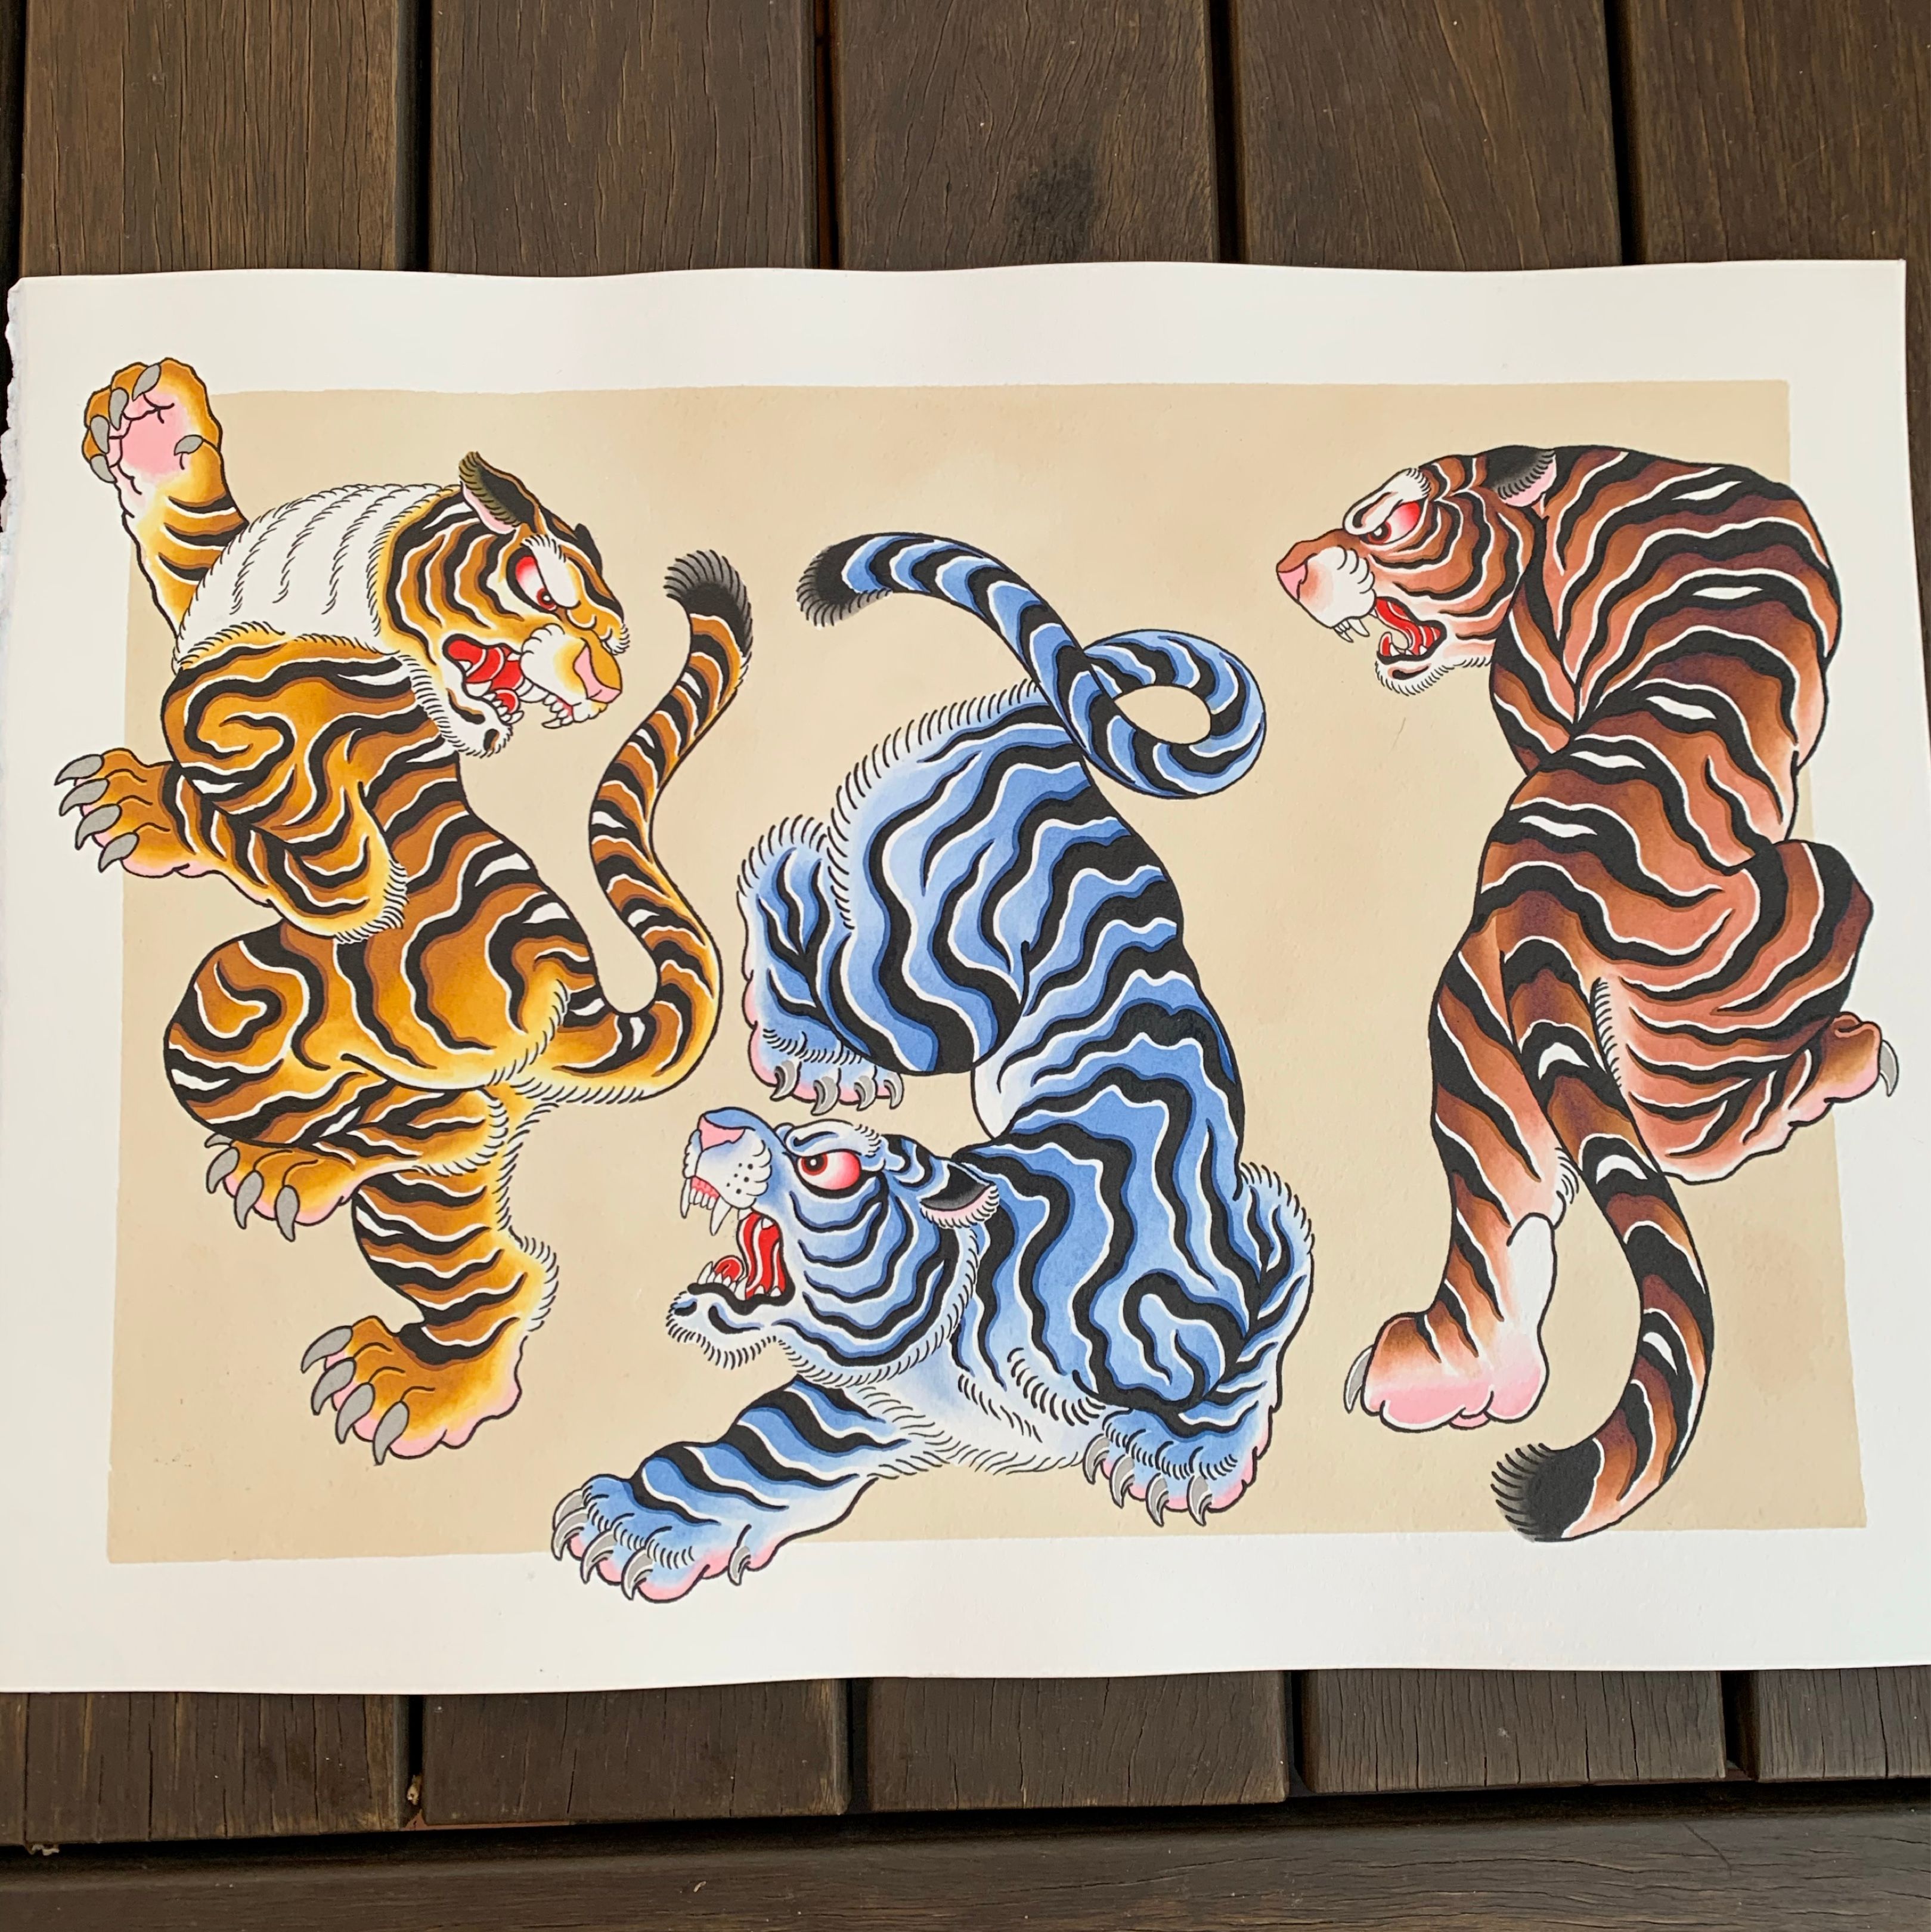 Minimalist Tiger Tattoo Design: Dark and White Tiger Head Illustration  Stock Illustration - Illustration of white, face: 295708921